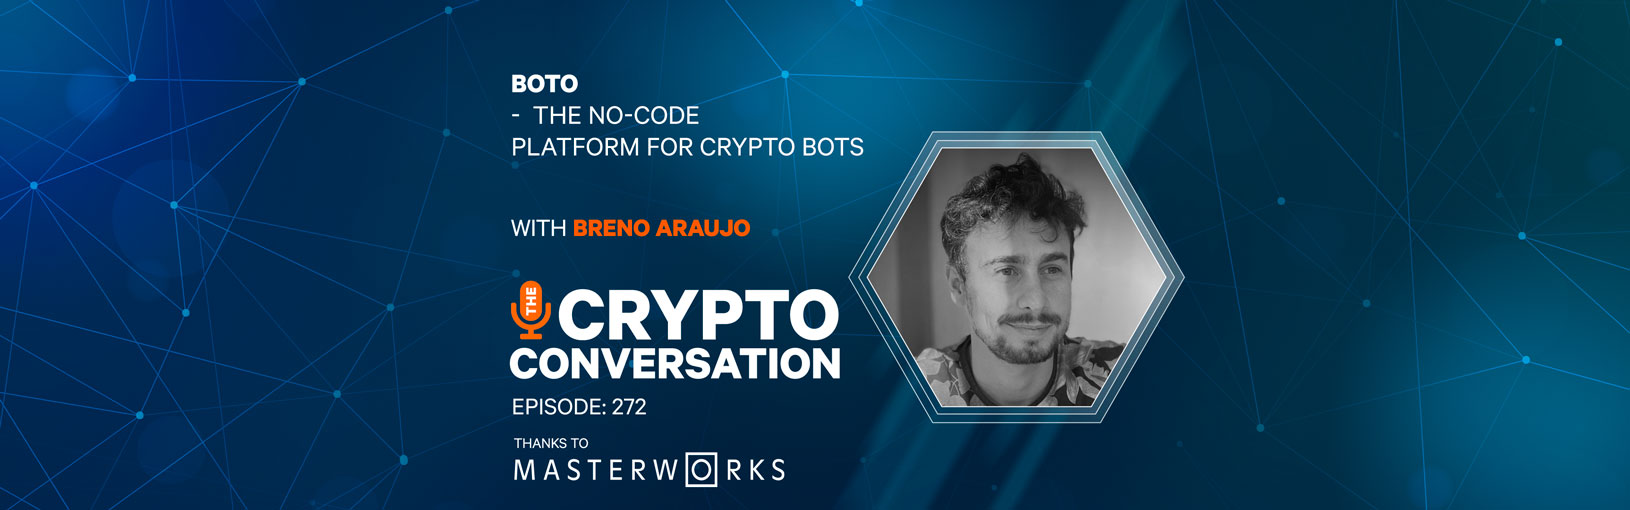 Boto – the no-code platform for crypto bots